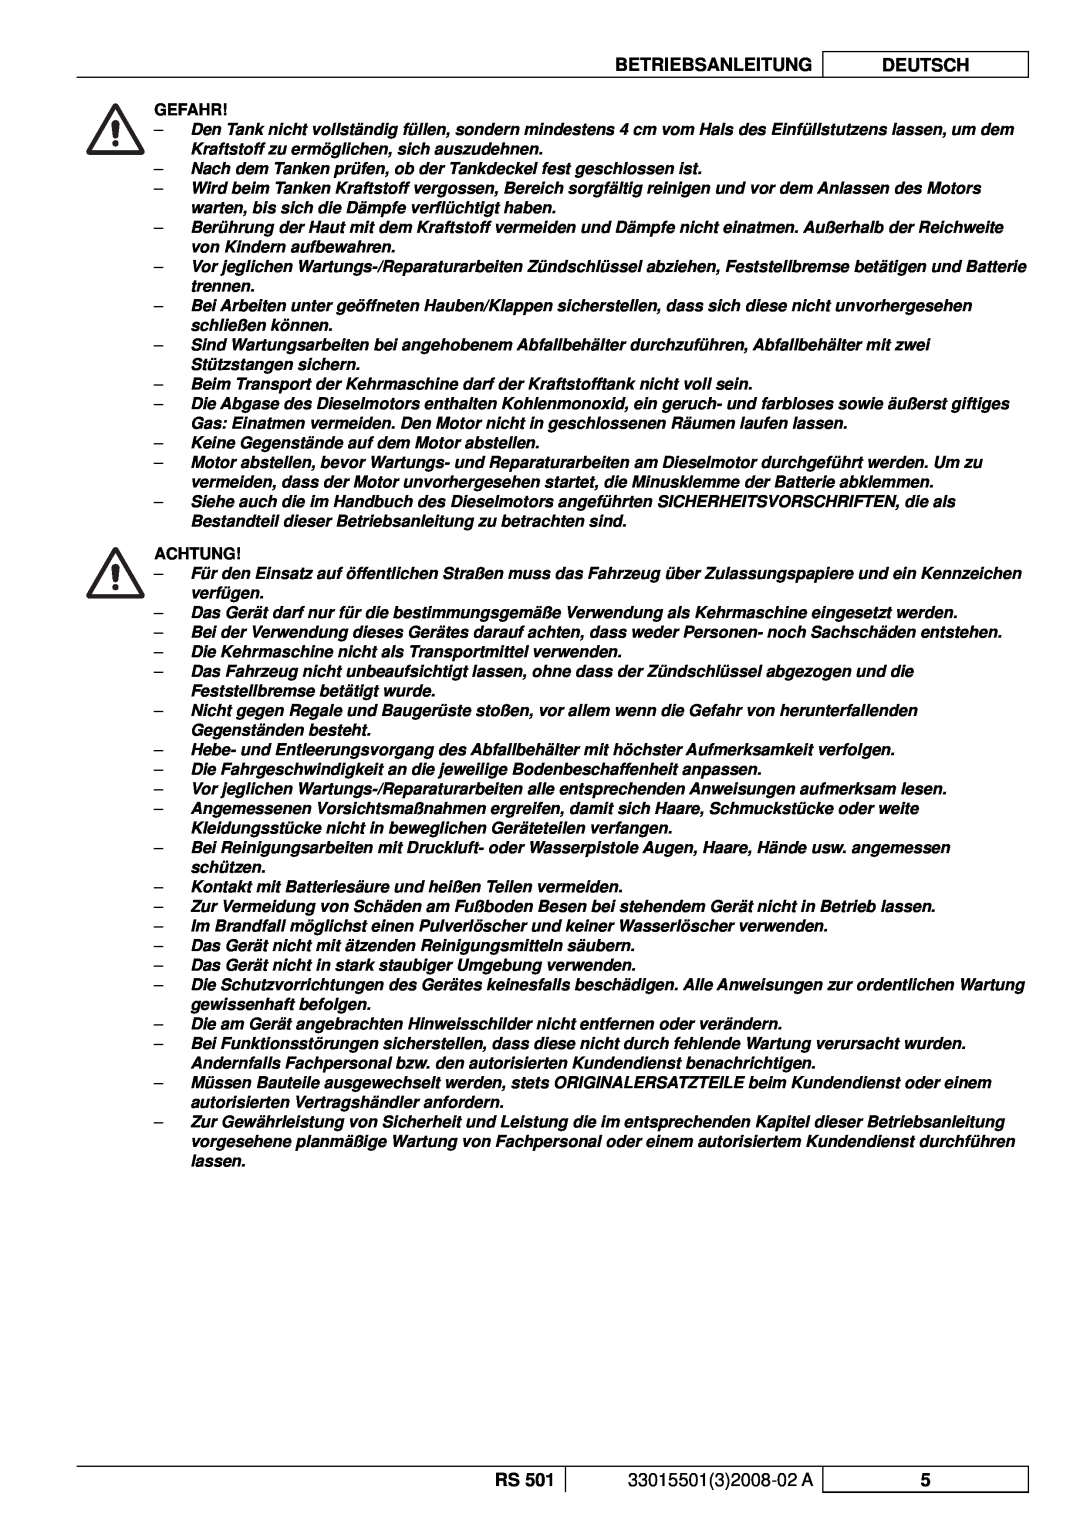 Nilfisk-ALTO RS 501 manuel dutilisation Betriebsanleitung, Deutsch, 3301550132008-02A, Gefahr, Achtung 